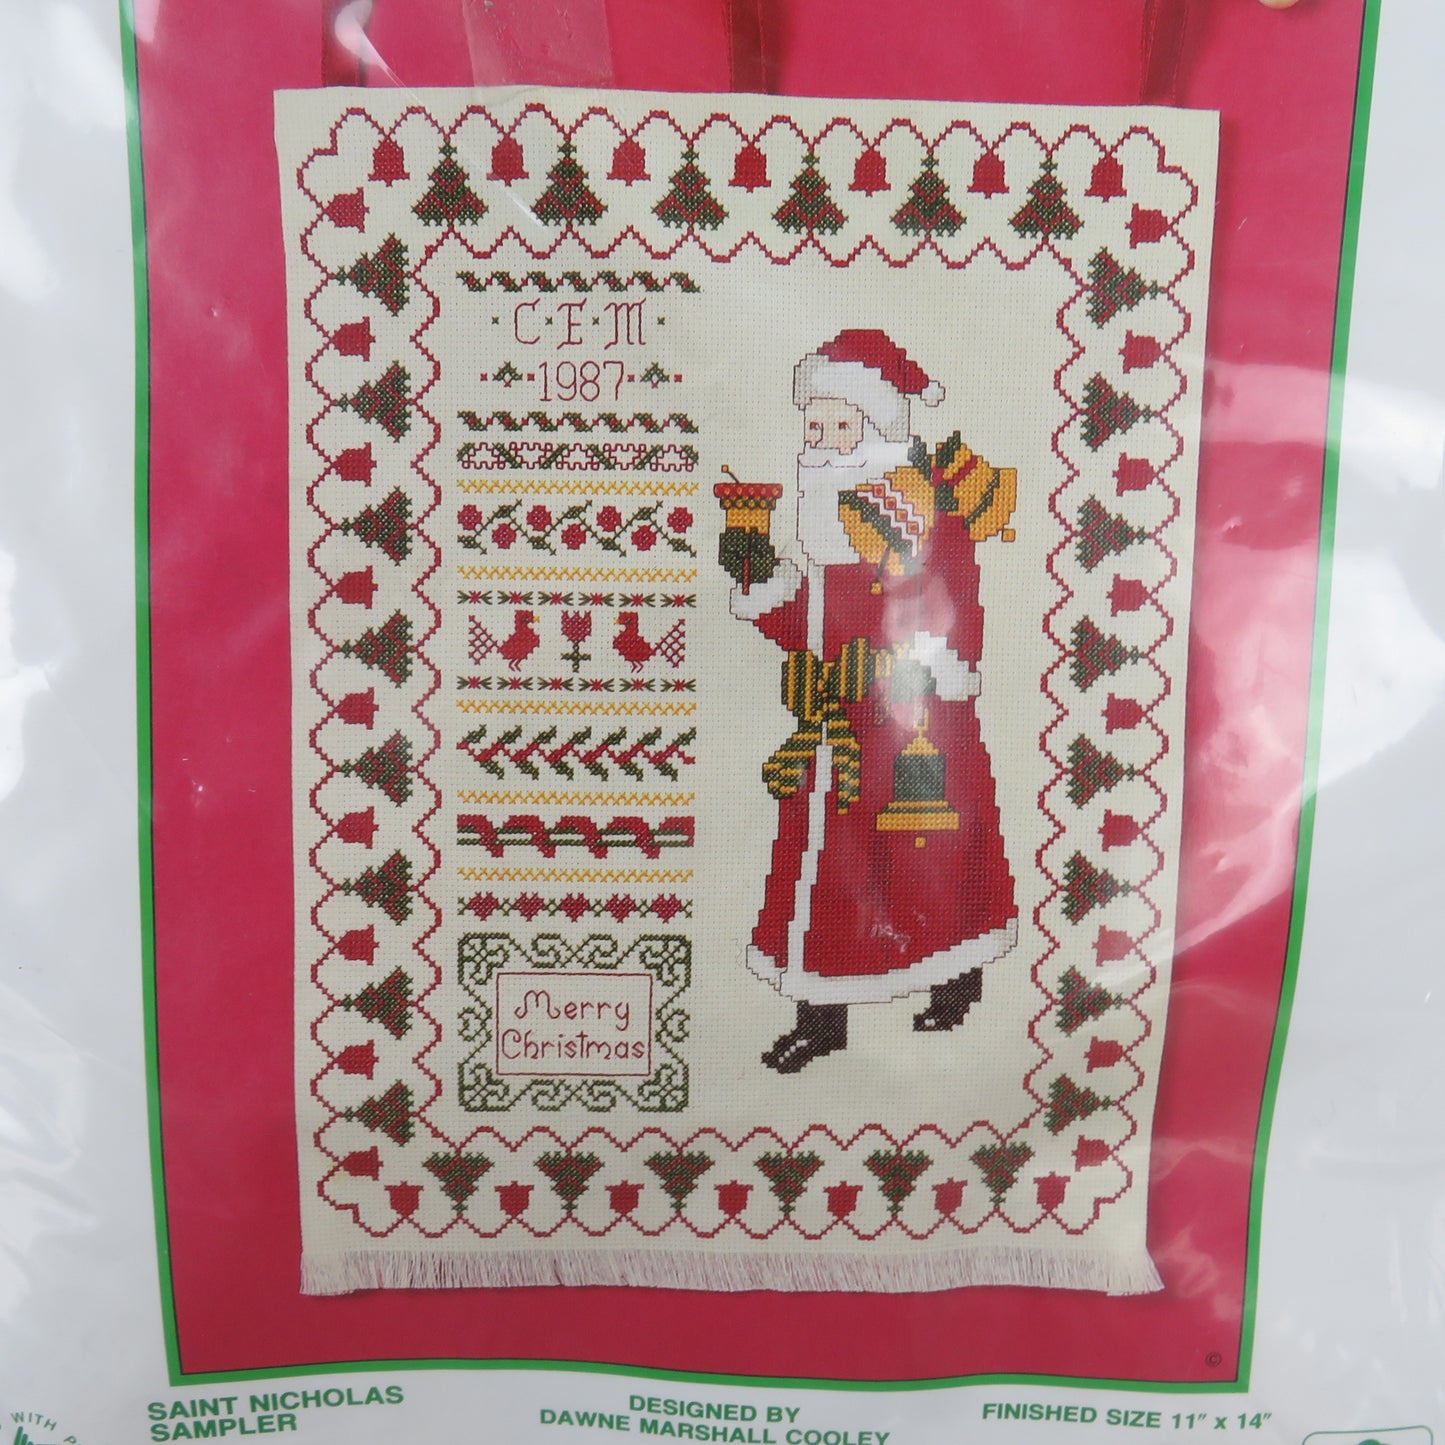 Sunset Christmas Sampler Kit Counted Cross Stitch St Nicholas Santa Claus Pattern - At Grandma's Table